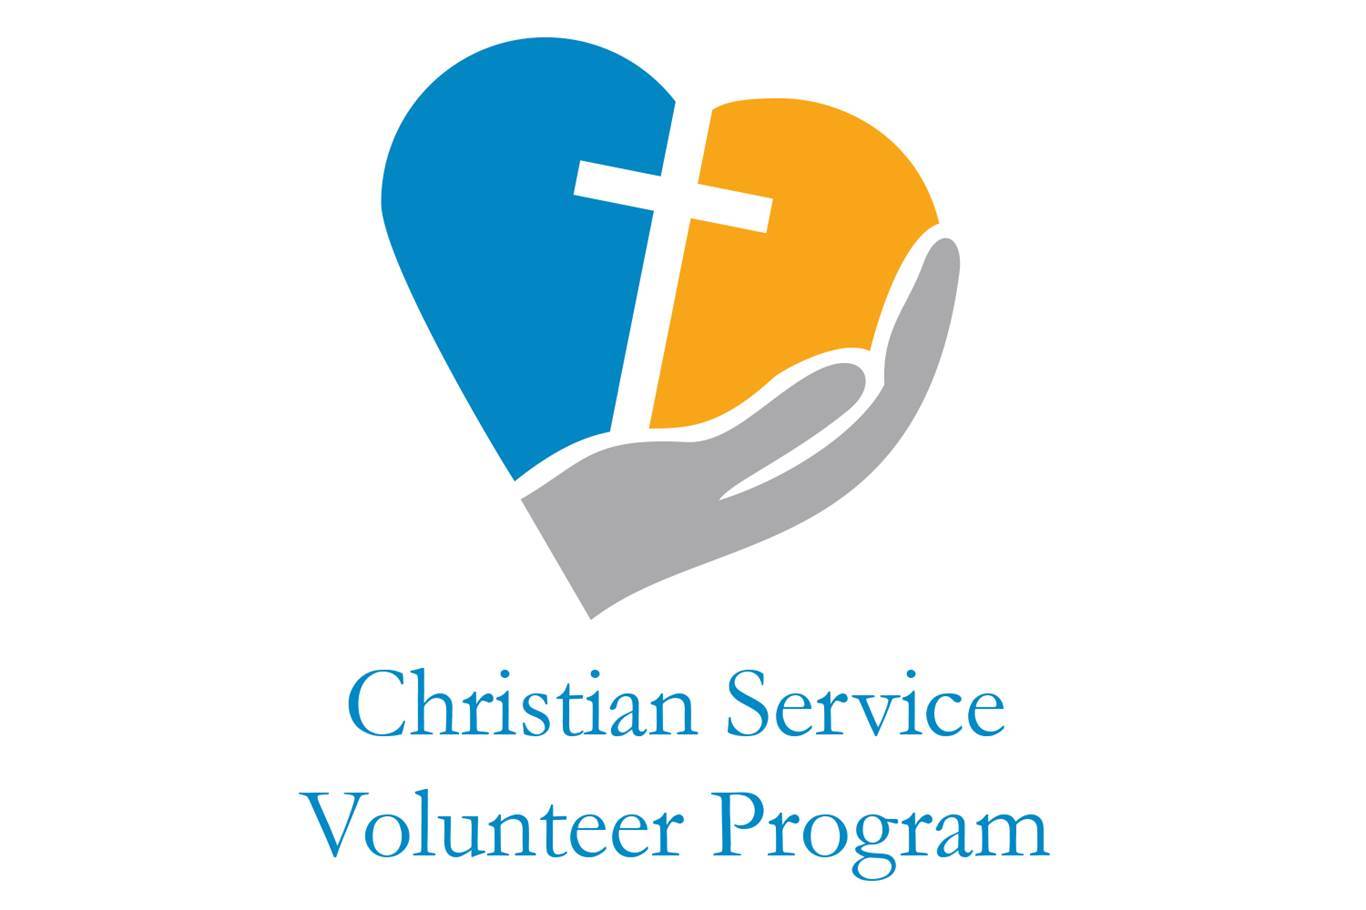 NEW HWCDSB Christian Service Volunteer Program Website